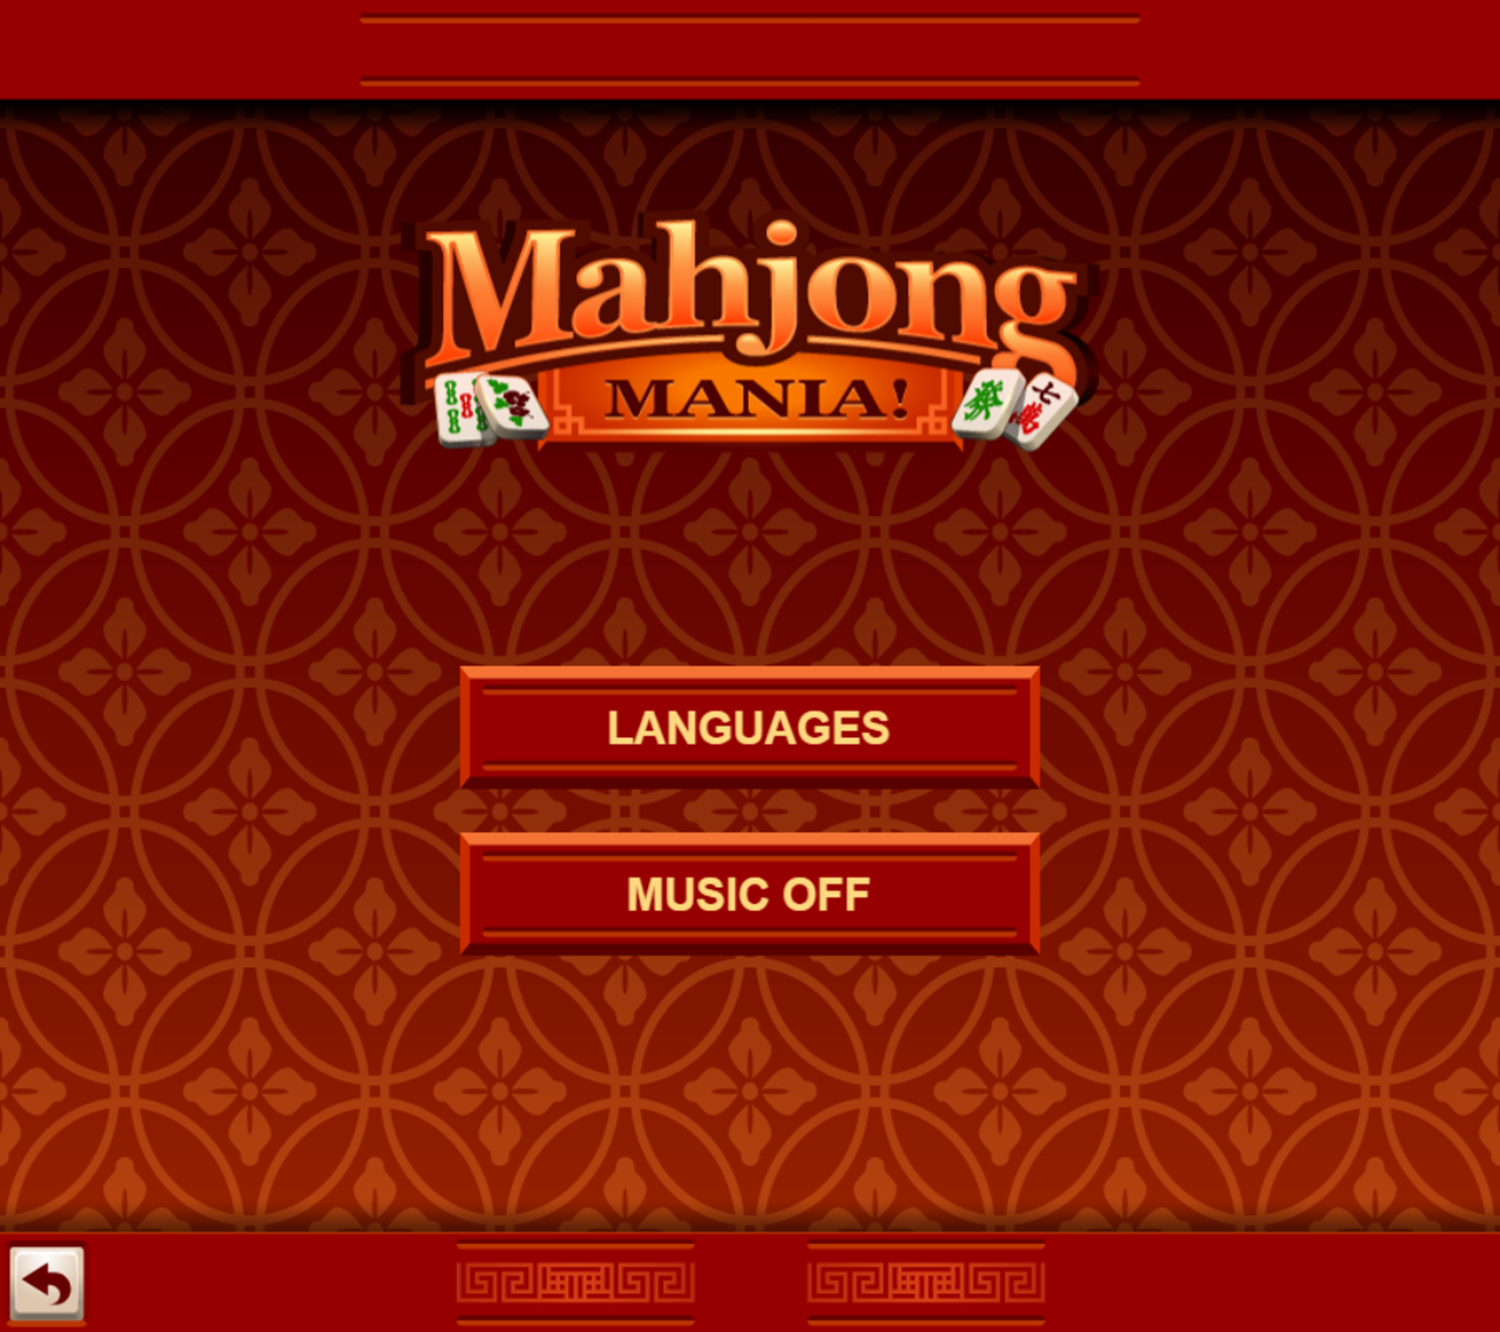 Mahjong Mania Game Options Screenshot.